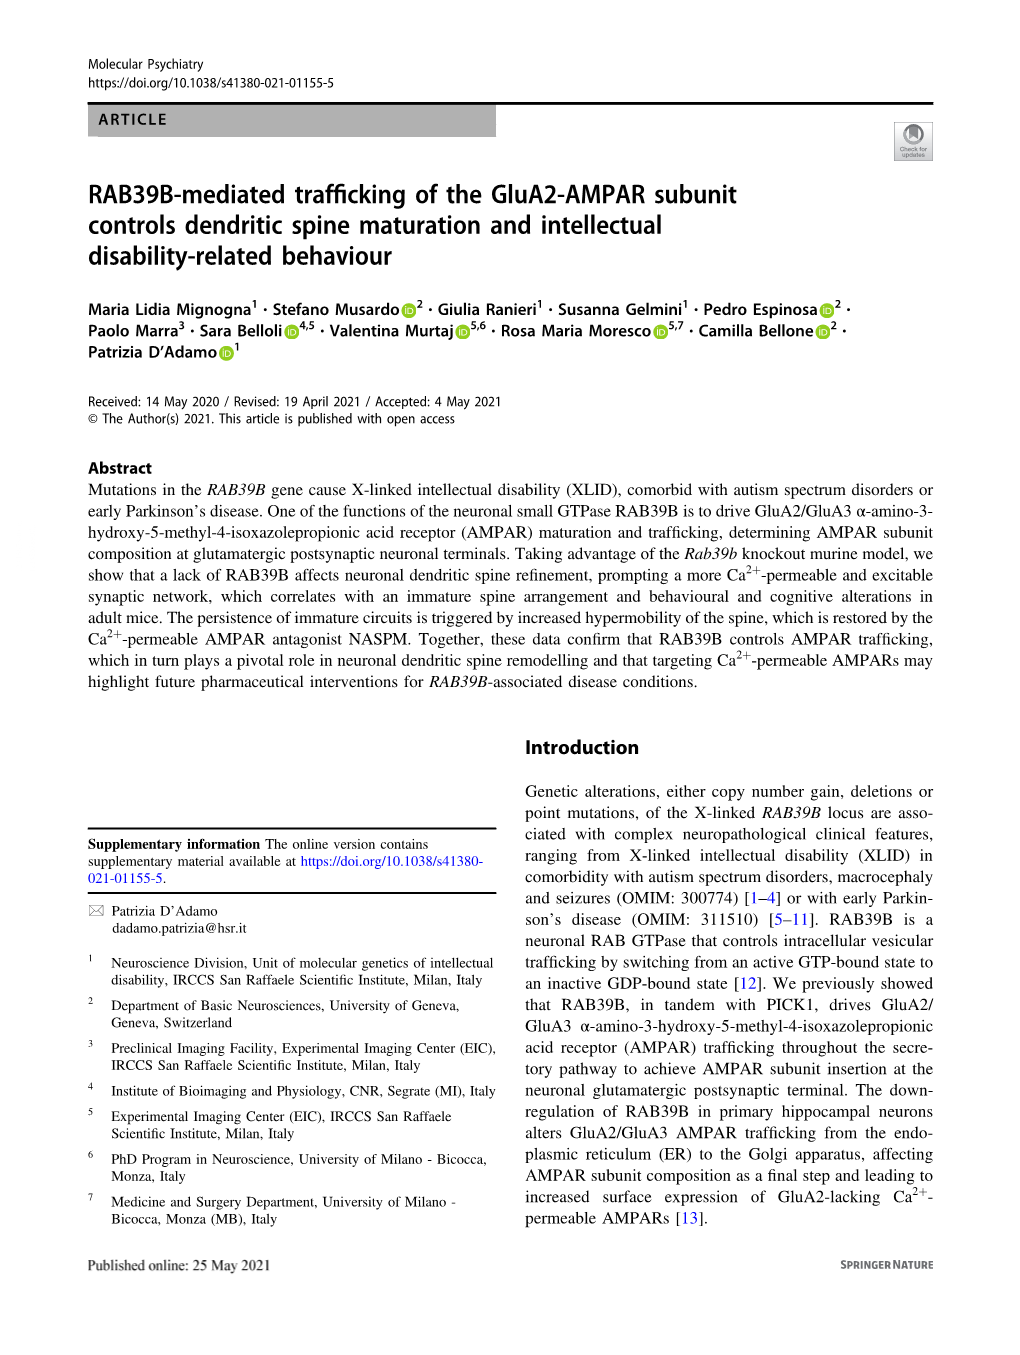 RAB39B-Mediated Trafficking of the Glua2-AMPAR Subunit Controls